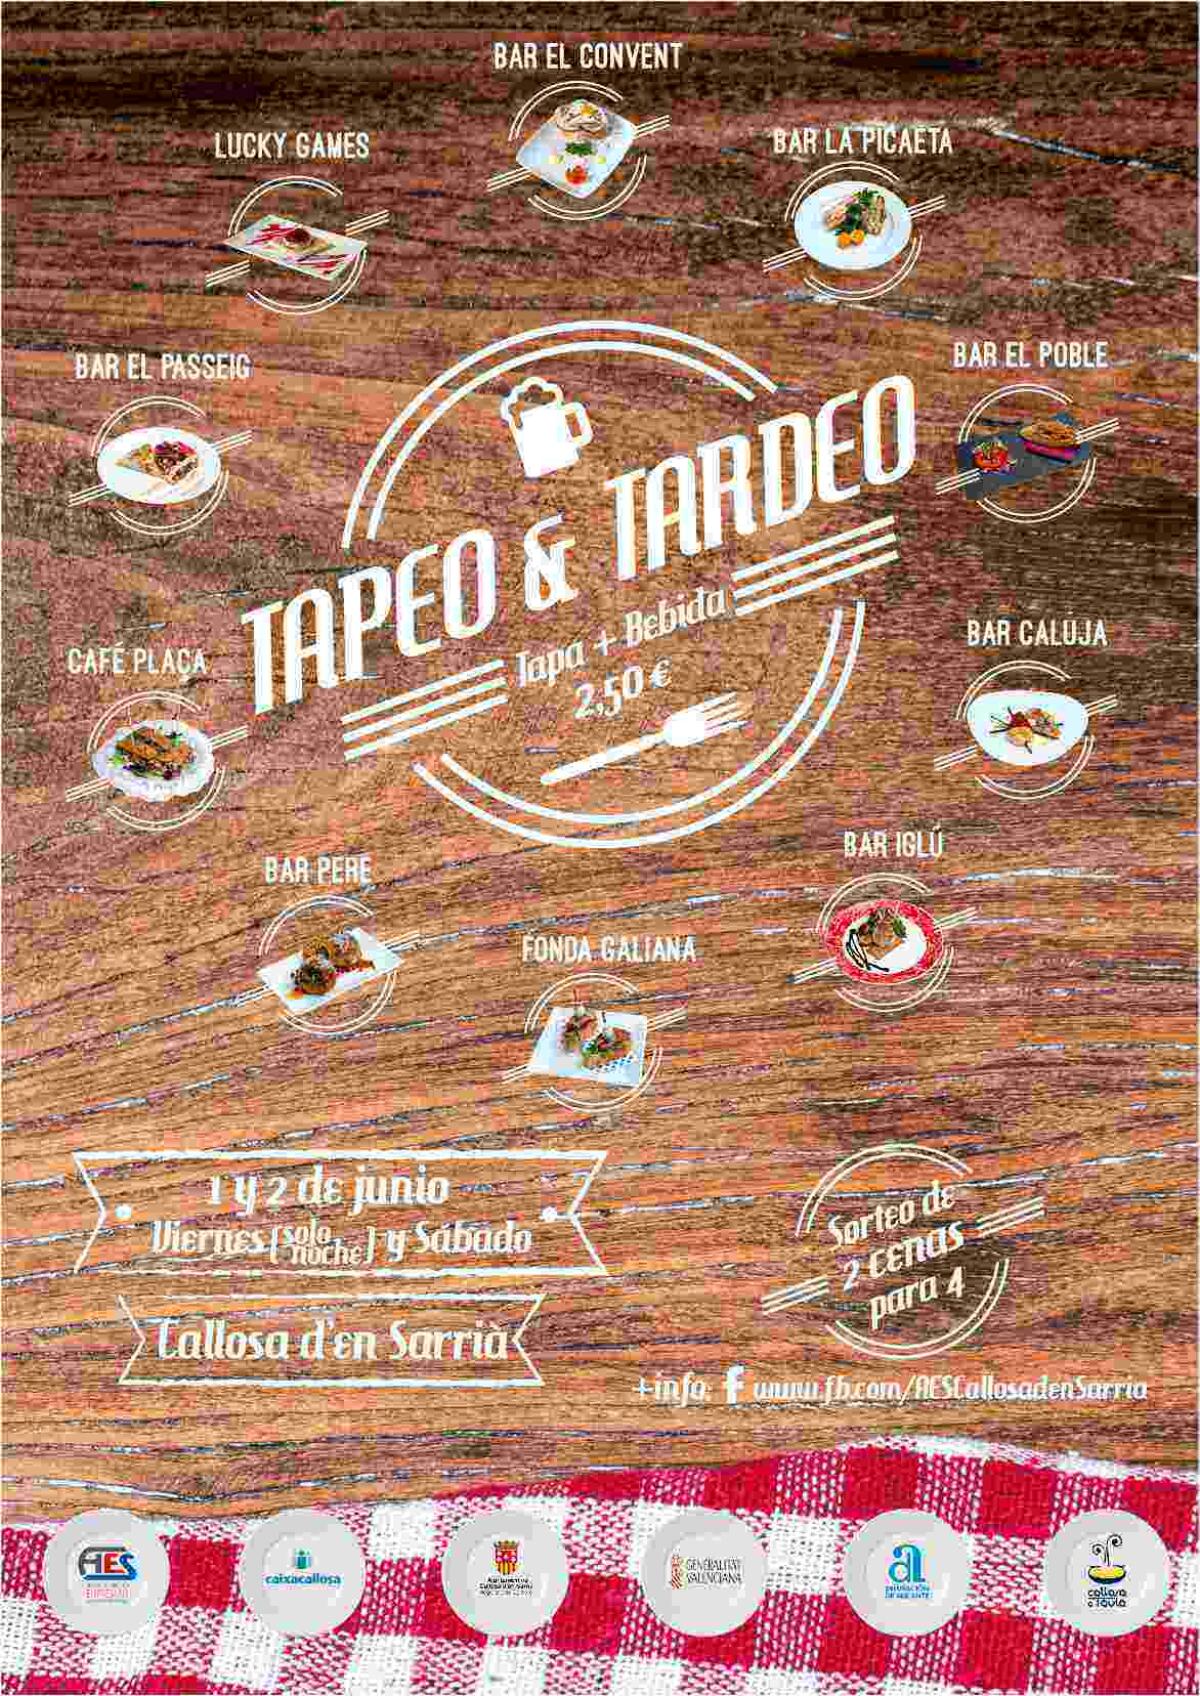   Callosa d’en Sarrià celebra este fin de semana la ruta Tapeo & Tardeo